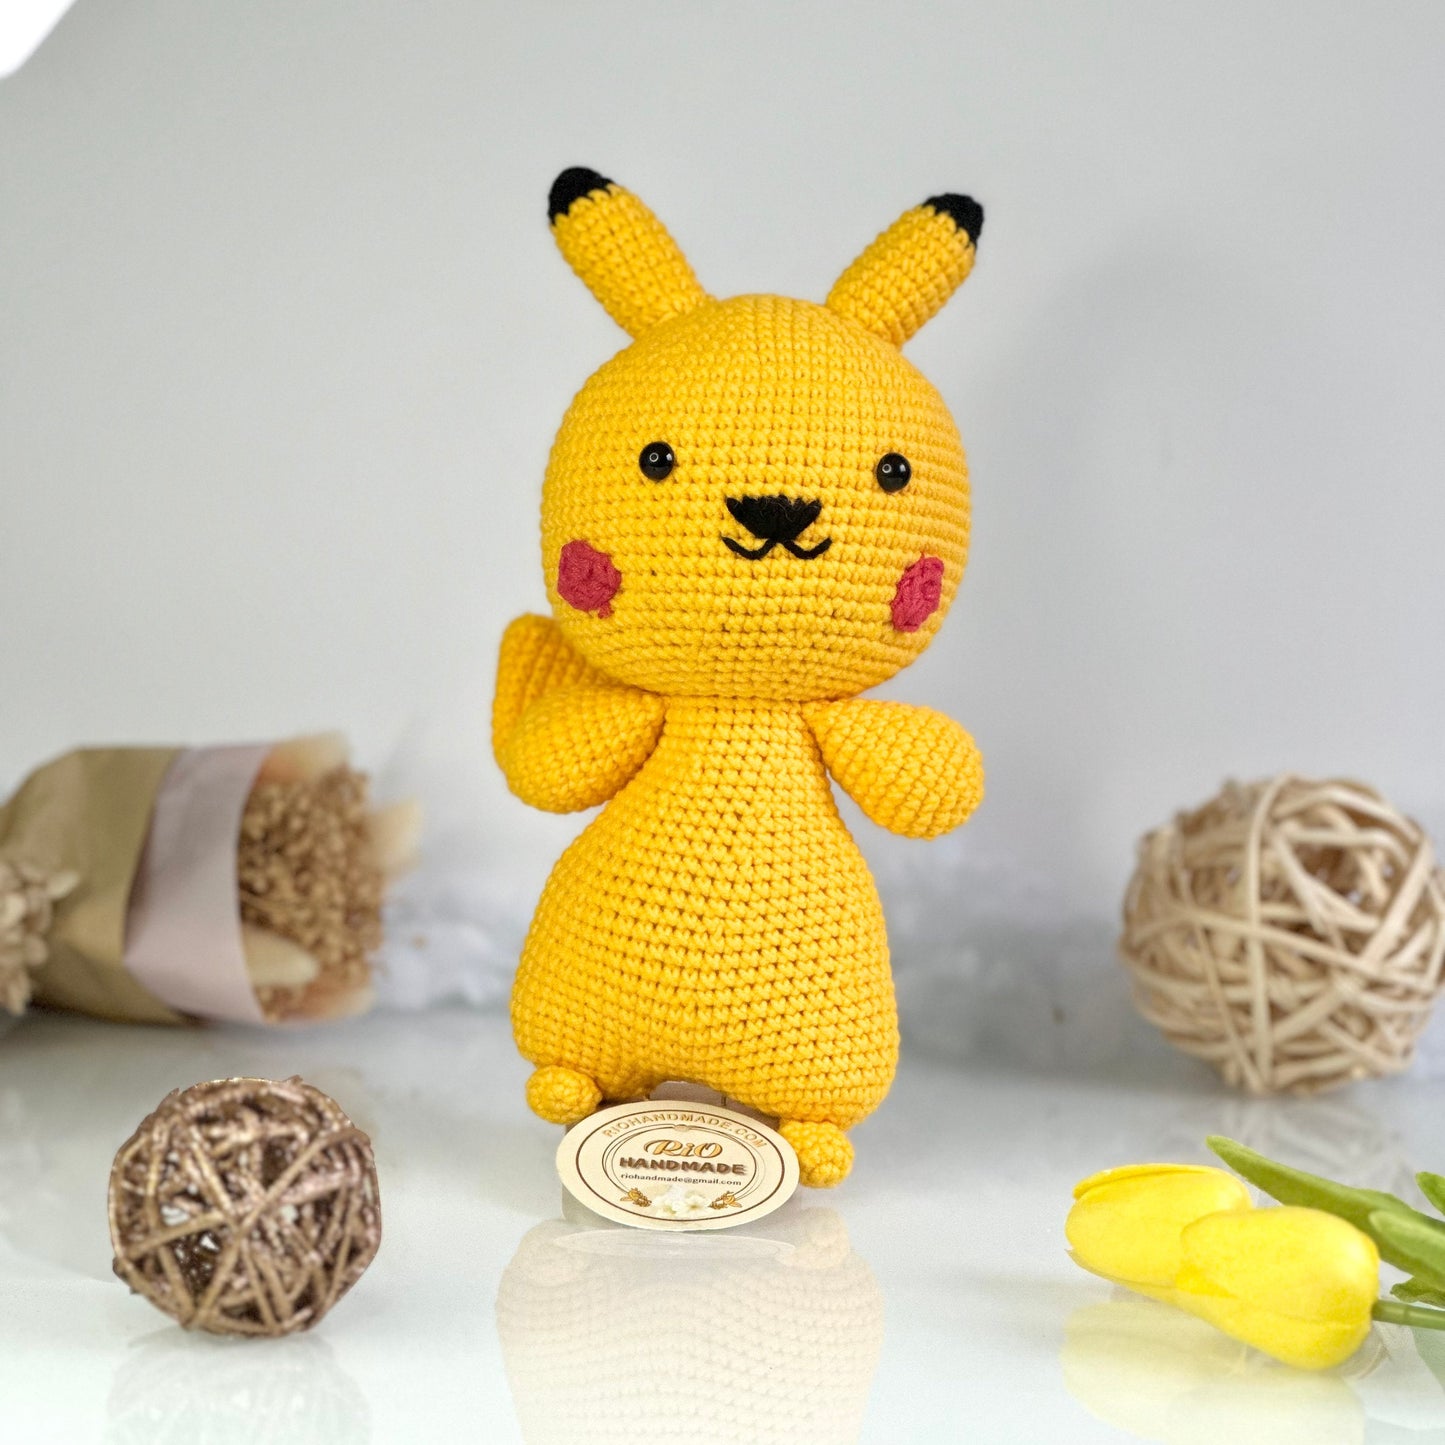 Handmade yarn cotton Pikachu inspired crochet, amigurumi, cute toy for toddler, kid, adult hobby,